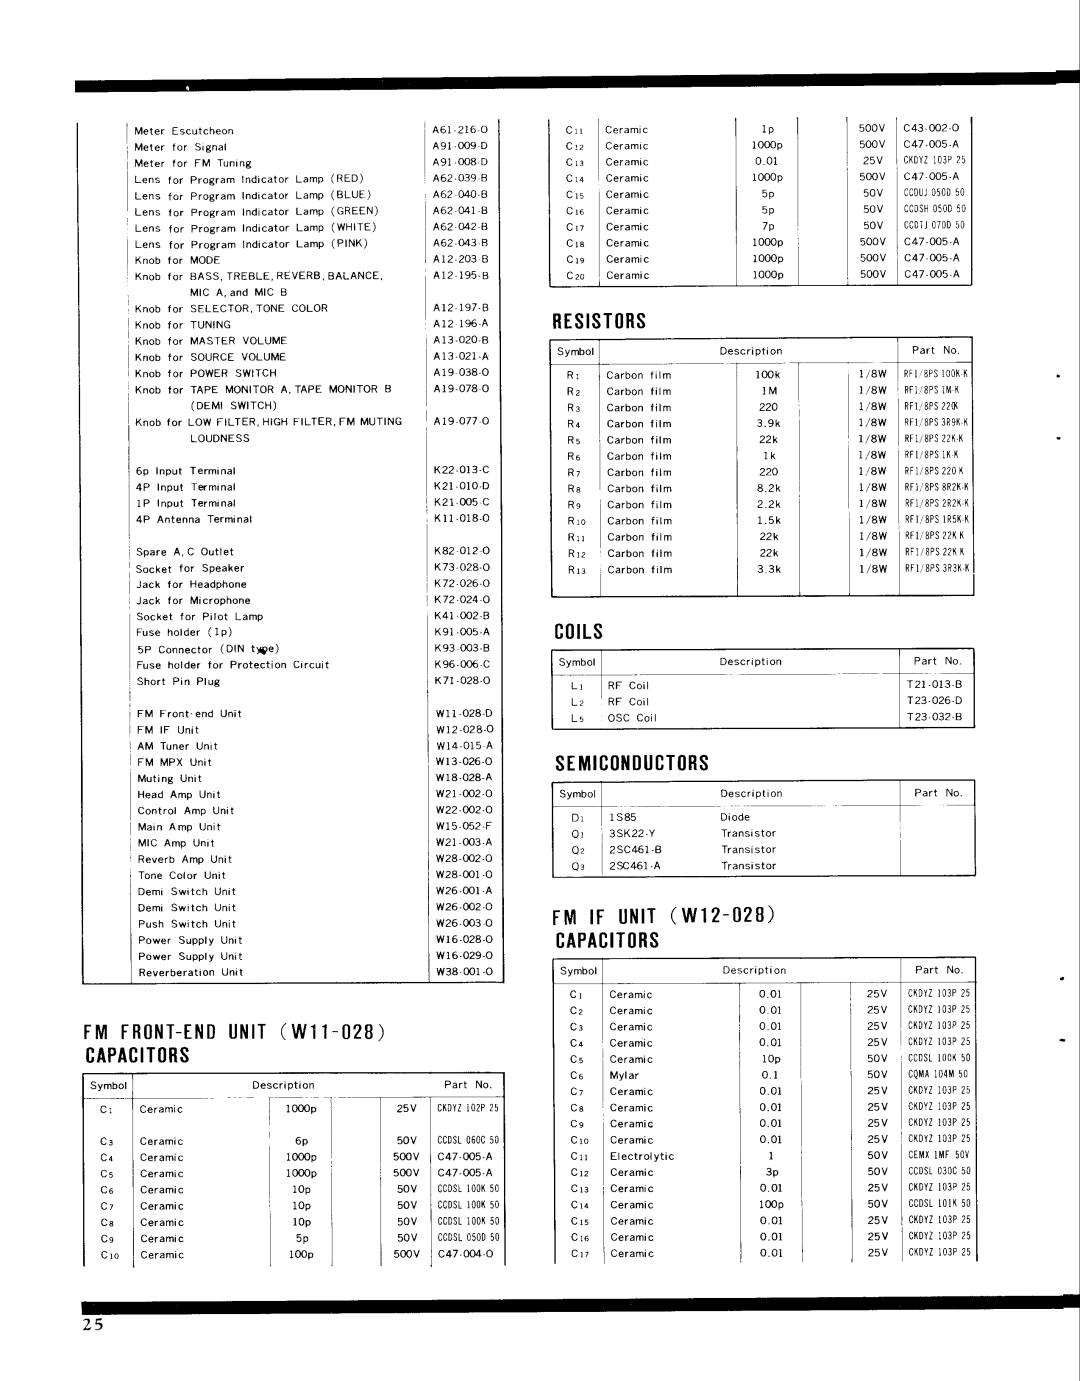 Pioneer SX-9000 service manual c0rLs, RESISTlRS, SEMICIIDUCTlRS, W I 2 - t l 2 B F M I F U N I T CAPACITlRS, l-tvaw 